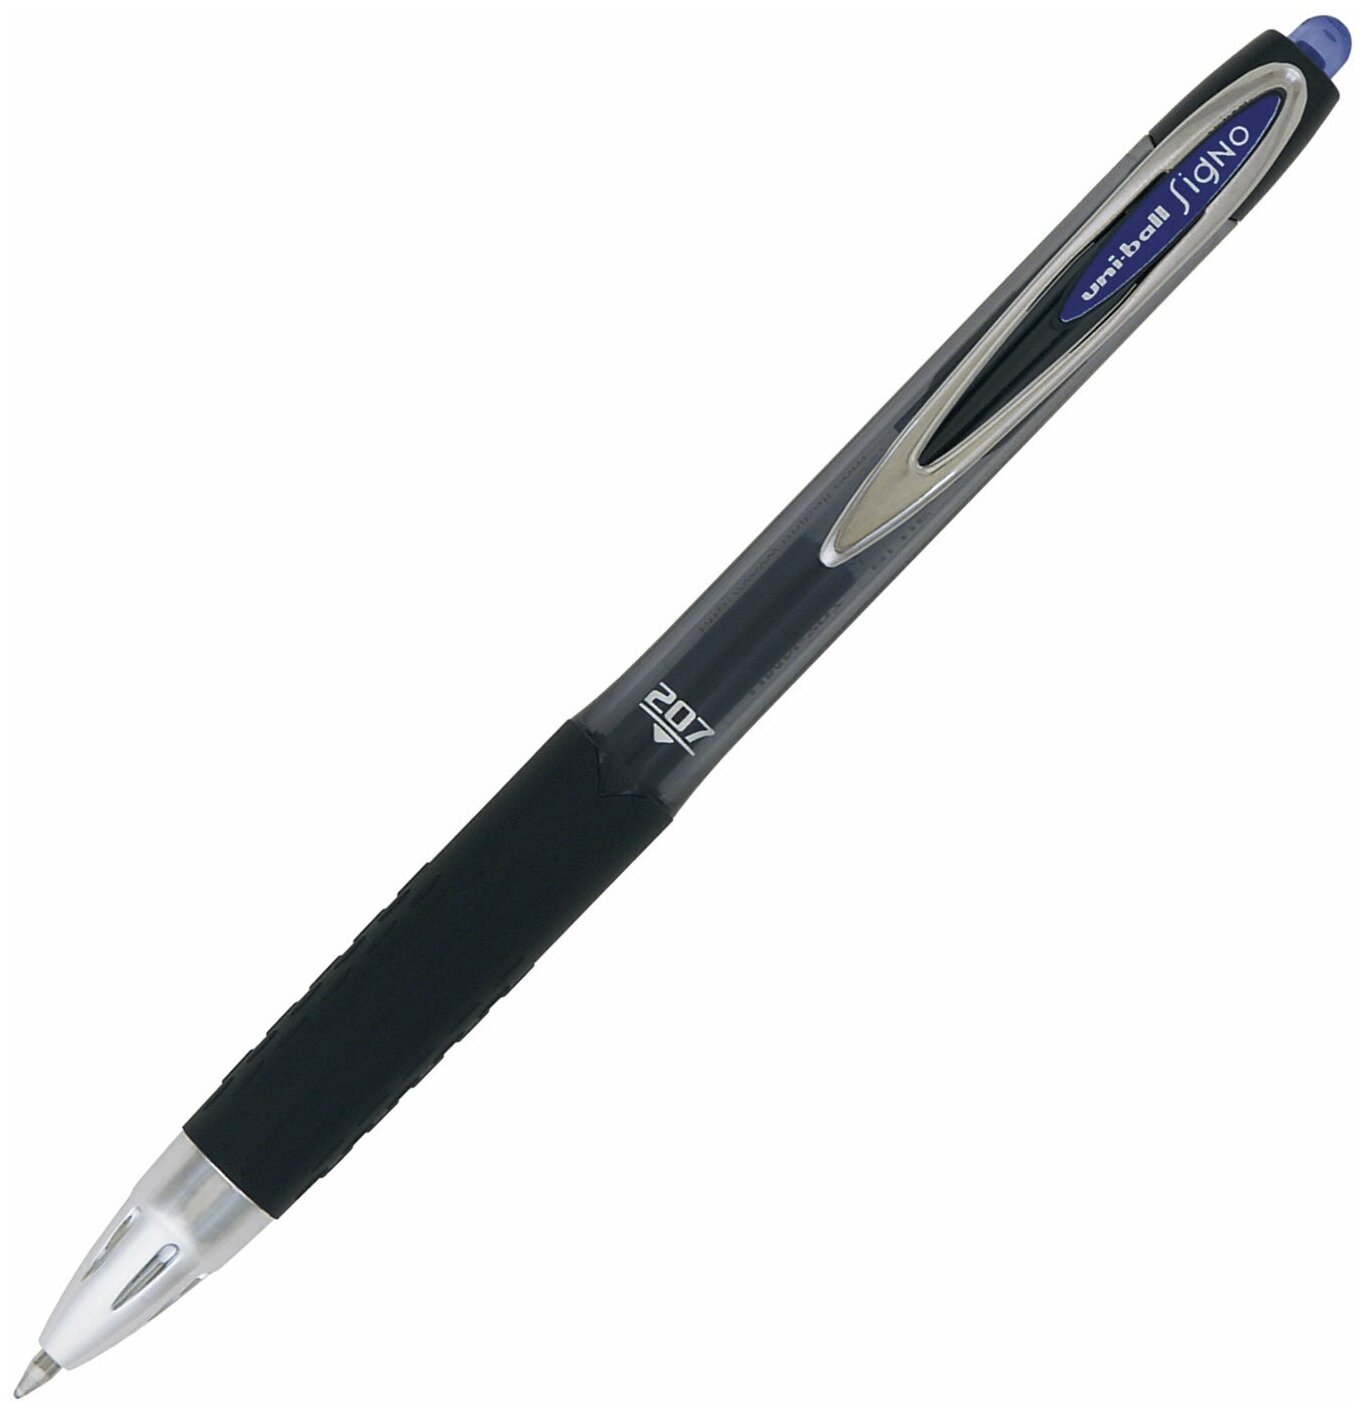 Uni Mitsubishi Pencil Ручка гелевая Signo 207, 0.7 мм (UMN-207), синий цвет чернил